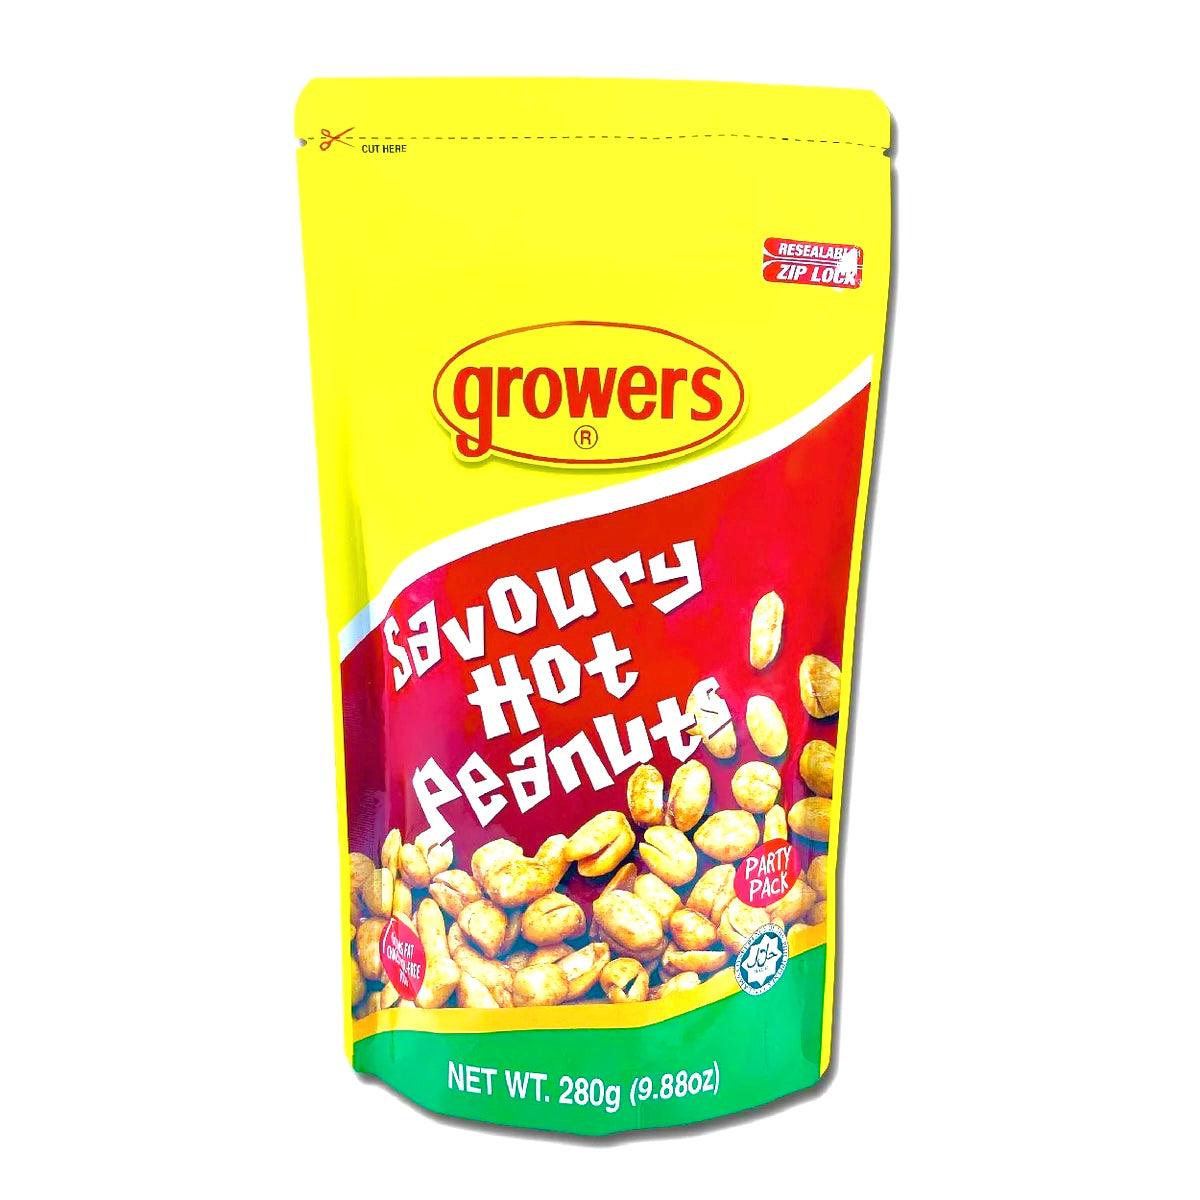 Growers Savoury Hot Peanuts 280g - The Snacks Box - Asian Snacks Store - The Snacks Box - Korean Snack - Japanese Snack